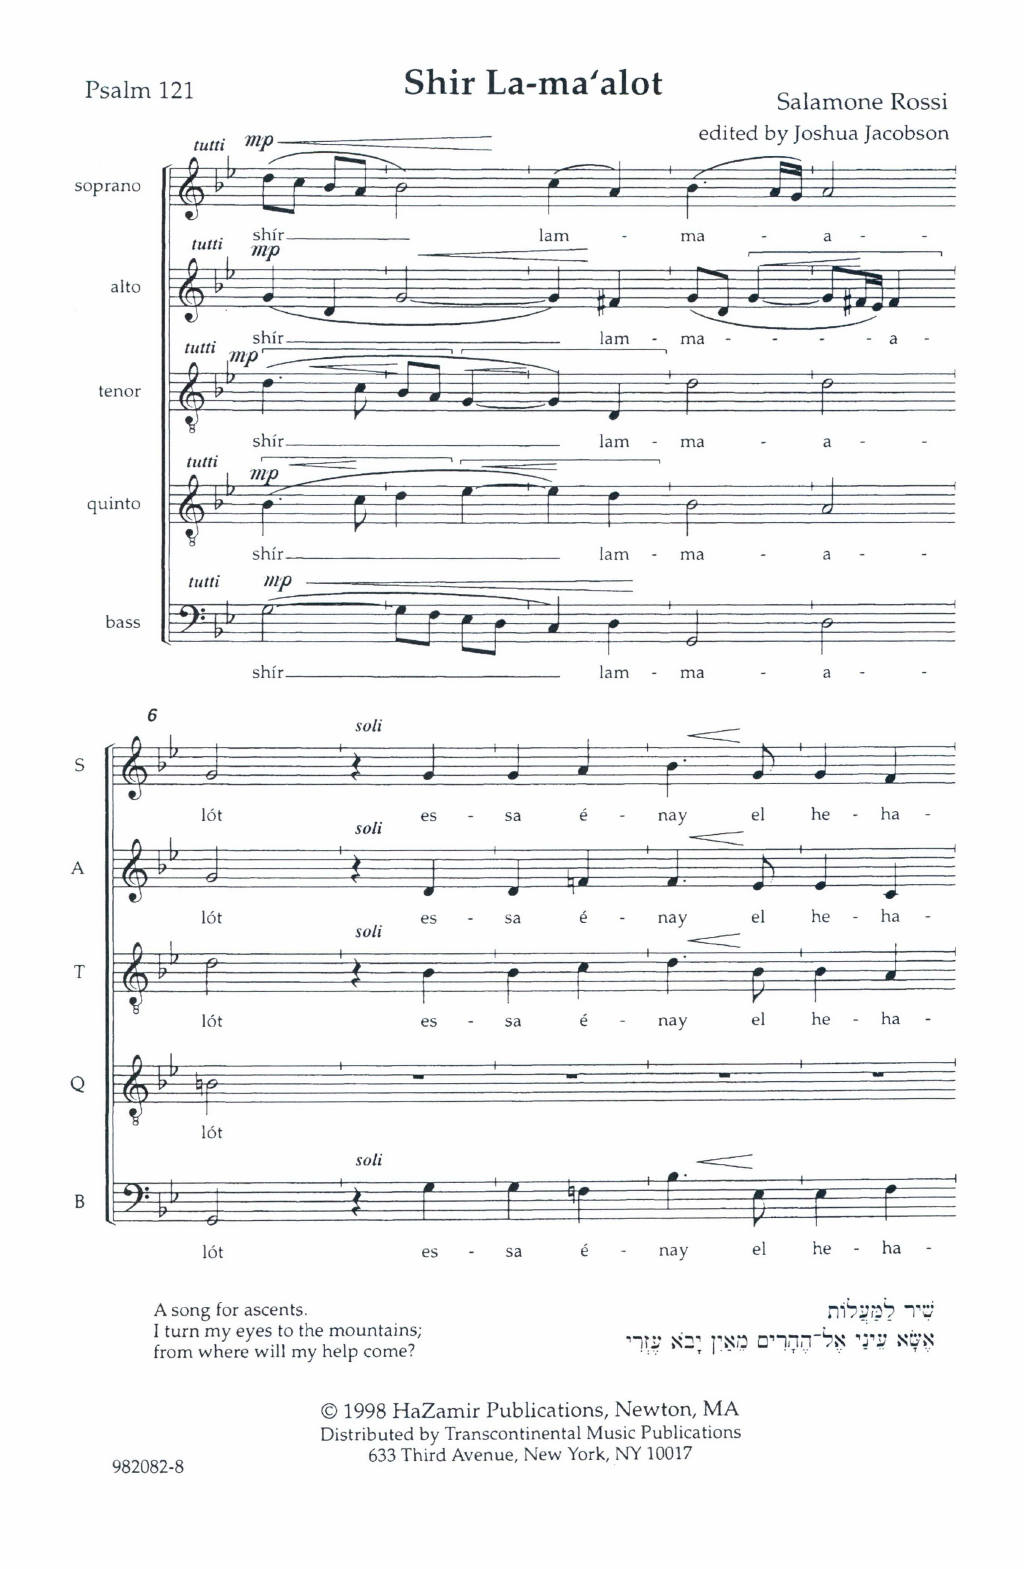 Salamone Rossi Shir La-ma'alot Sheet Music Notes & Chords for Choir - Download or Print PDF